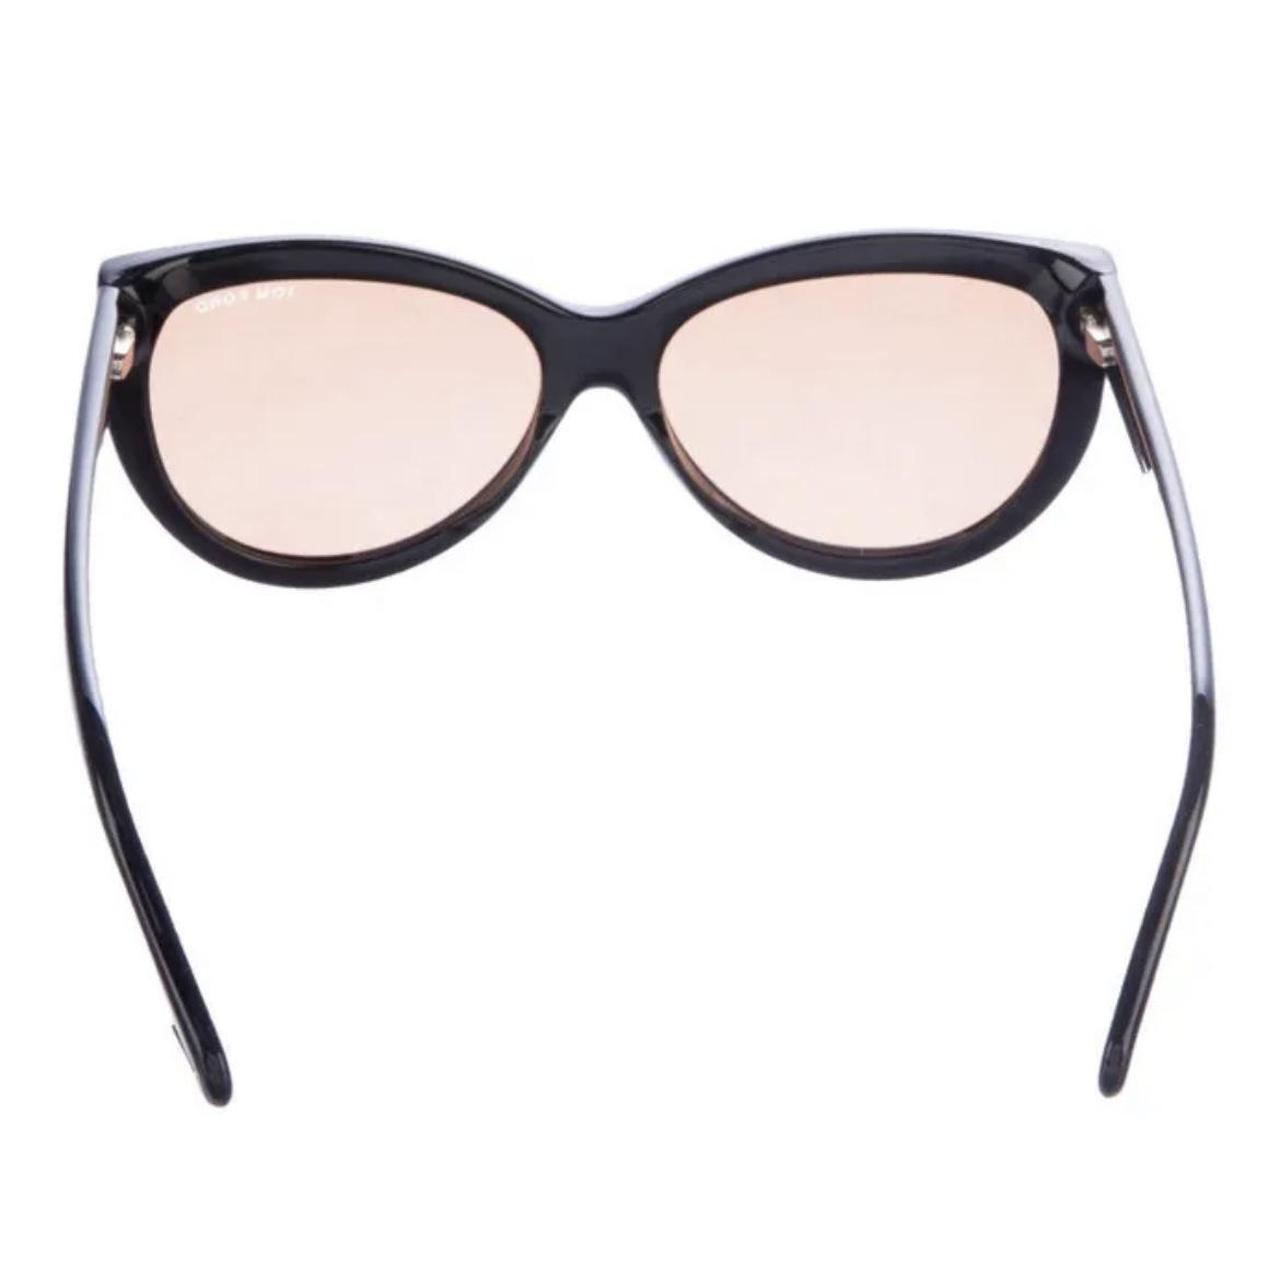 Sikker på en ferie rådgive Tom Ford classic ANOUK sunglasses - Depop